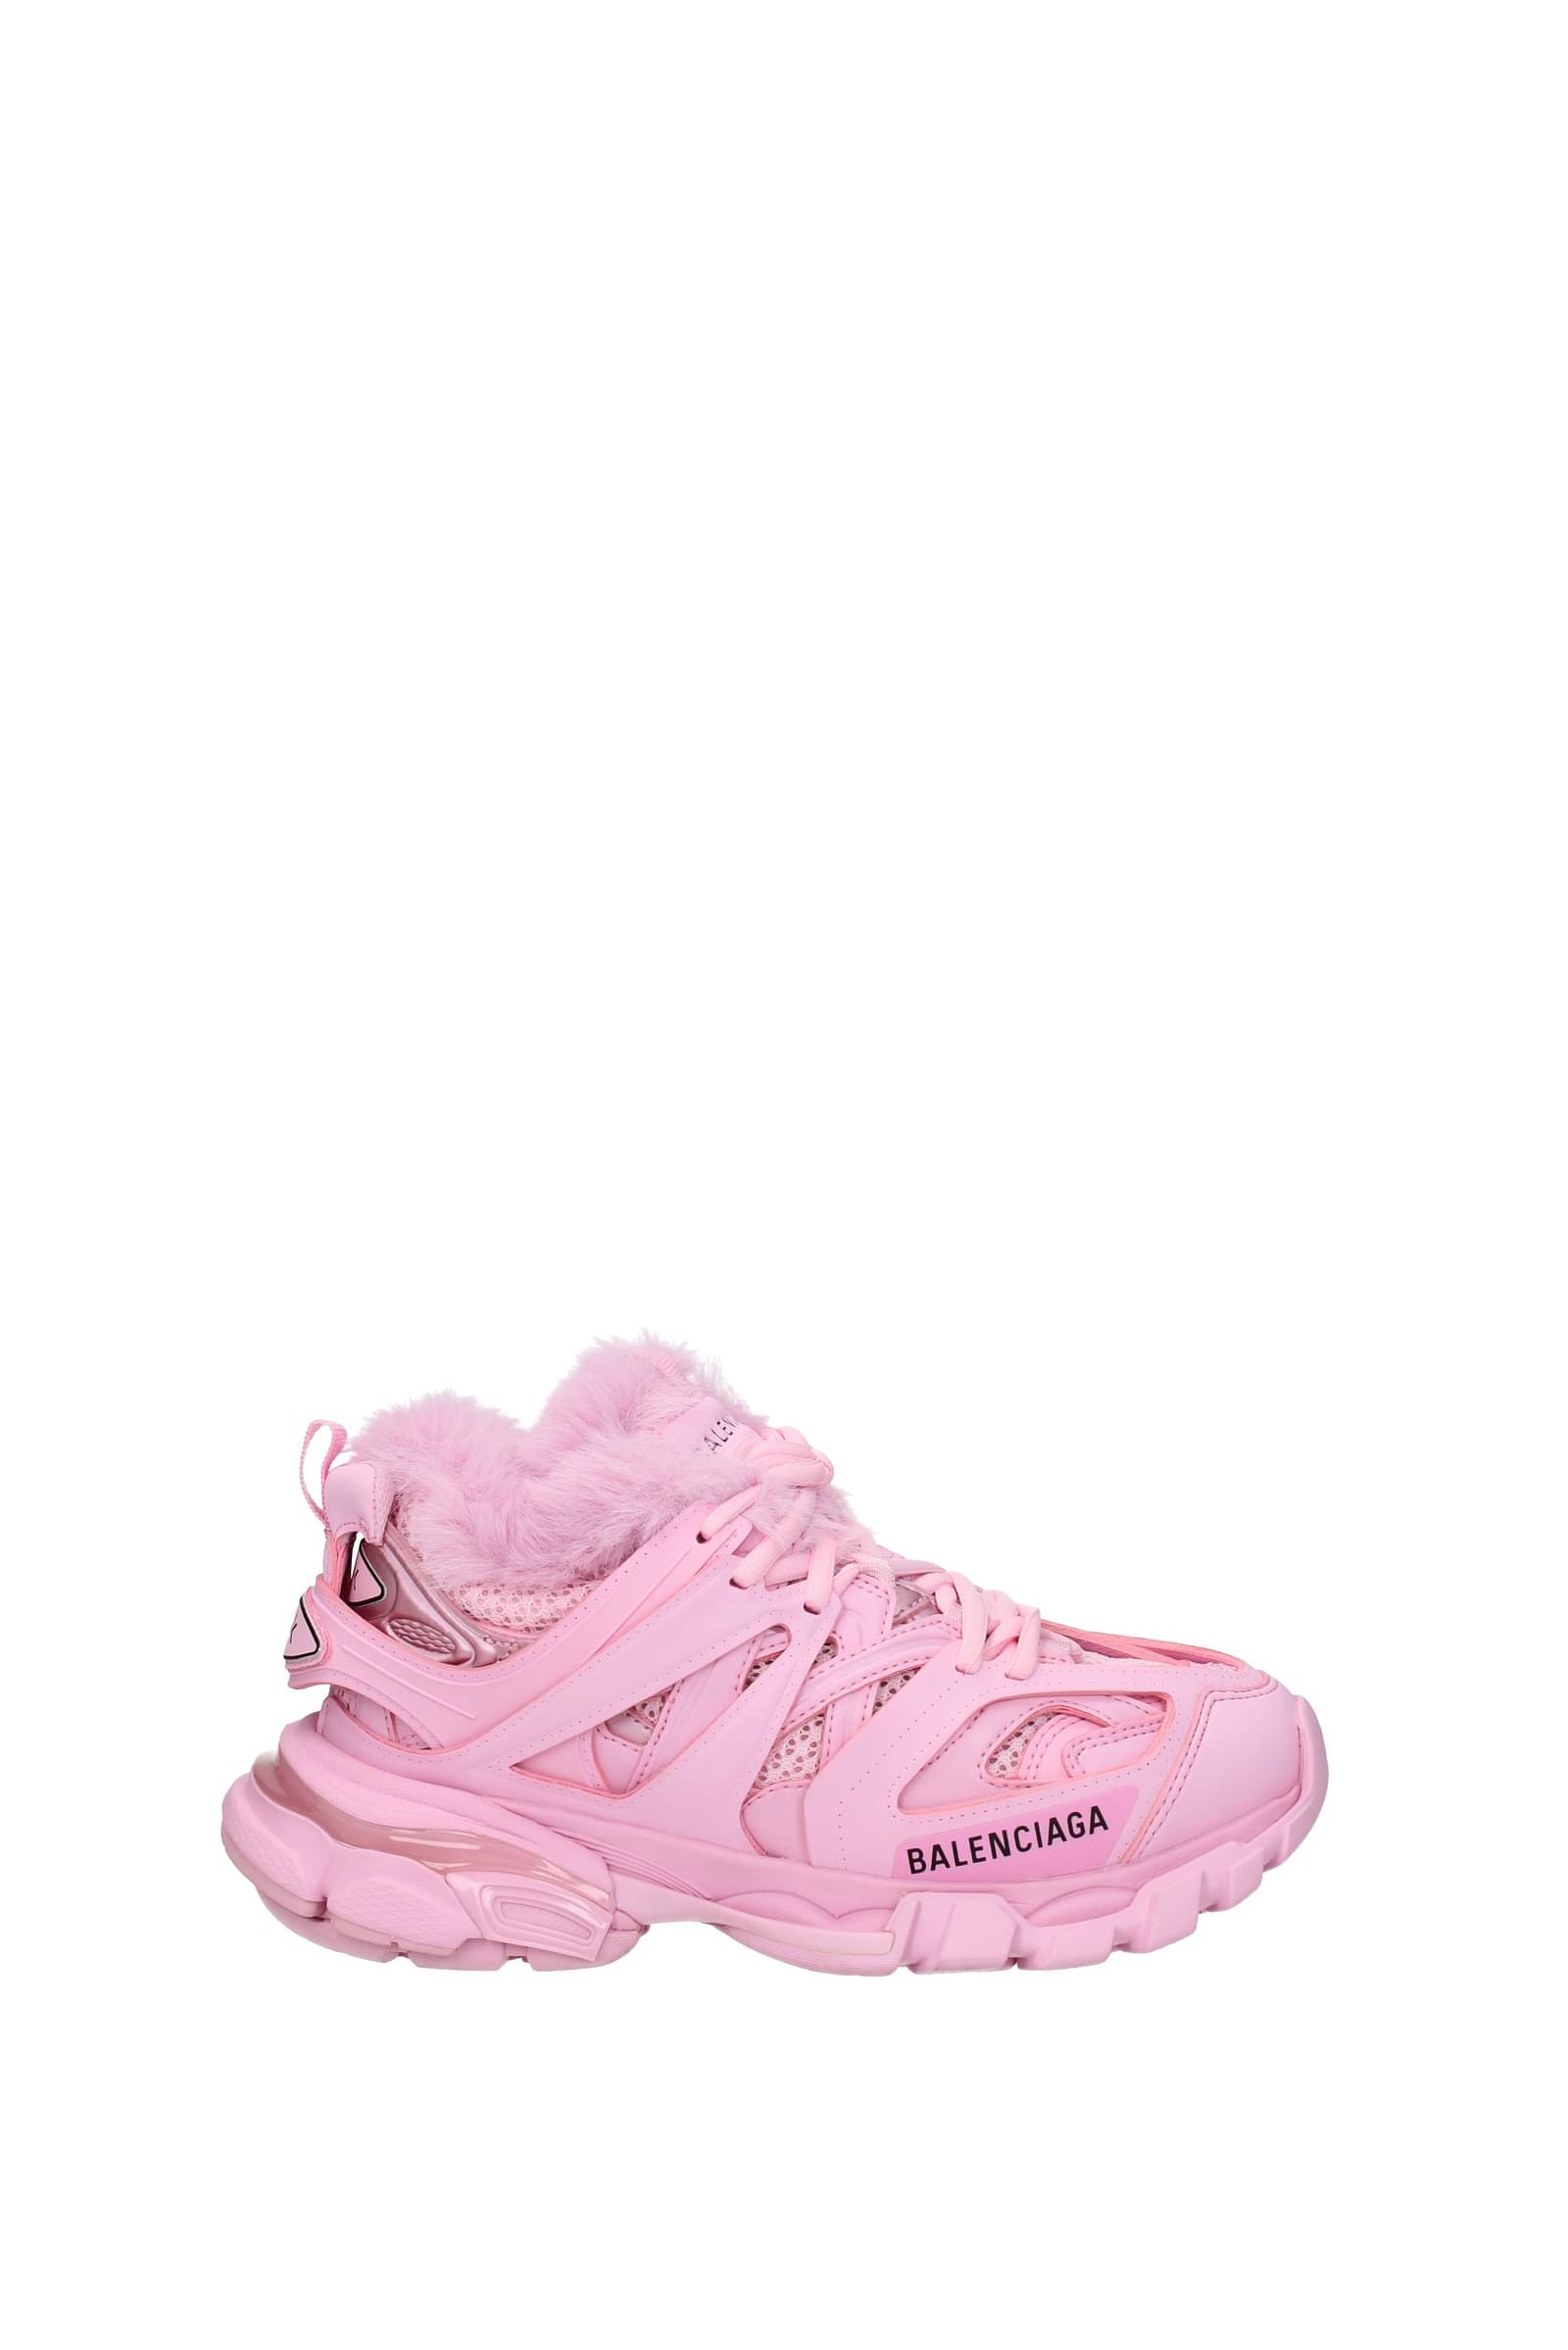 Last Chance  Drop Balenciaga Women track sneakers Faded Pink EU 37 US 7